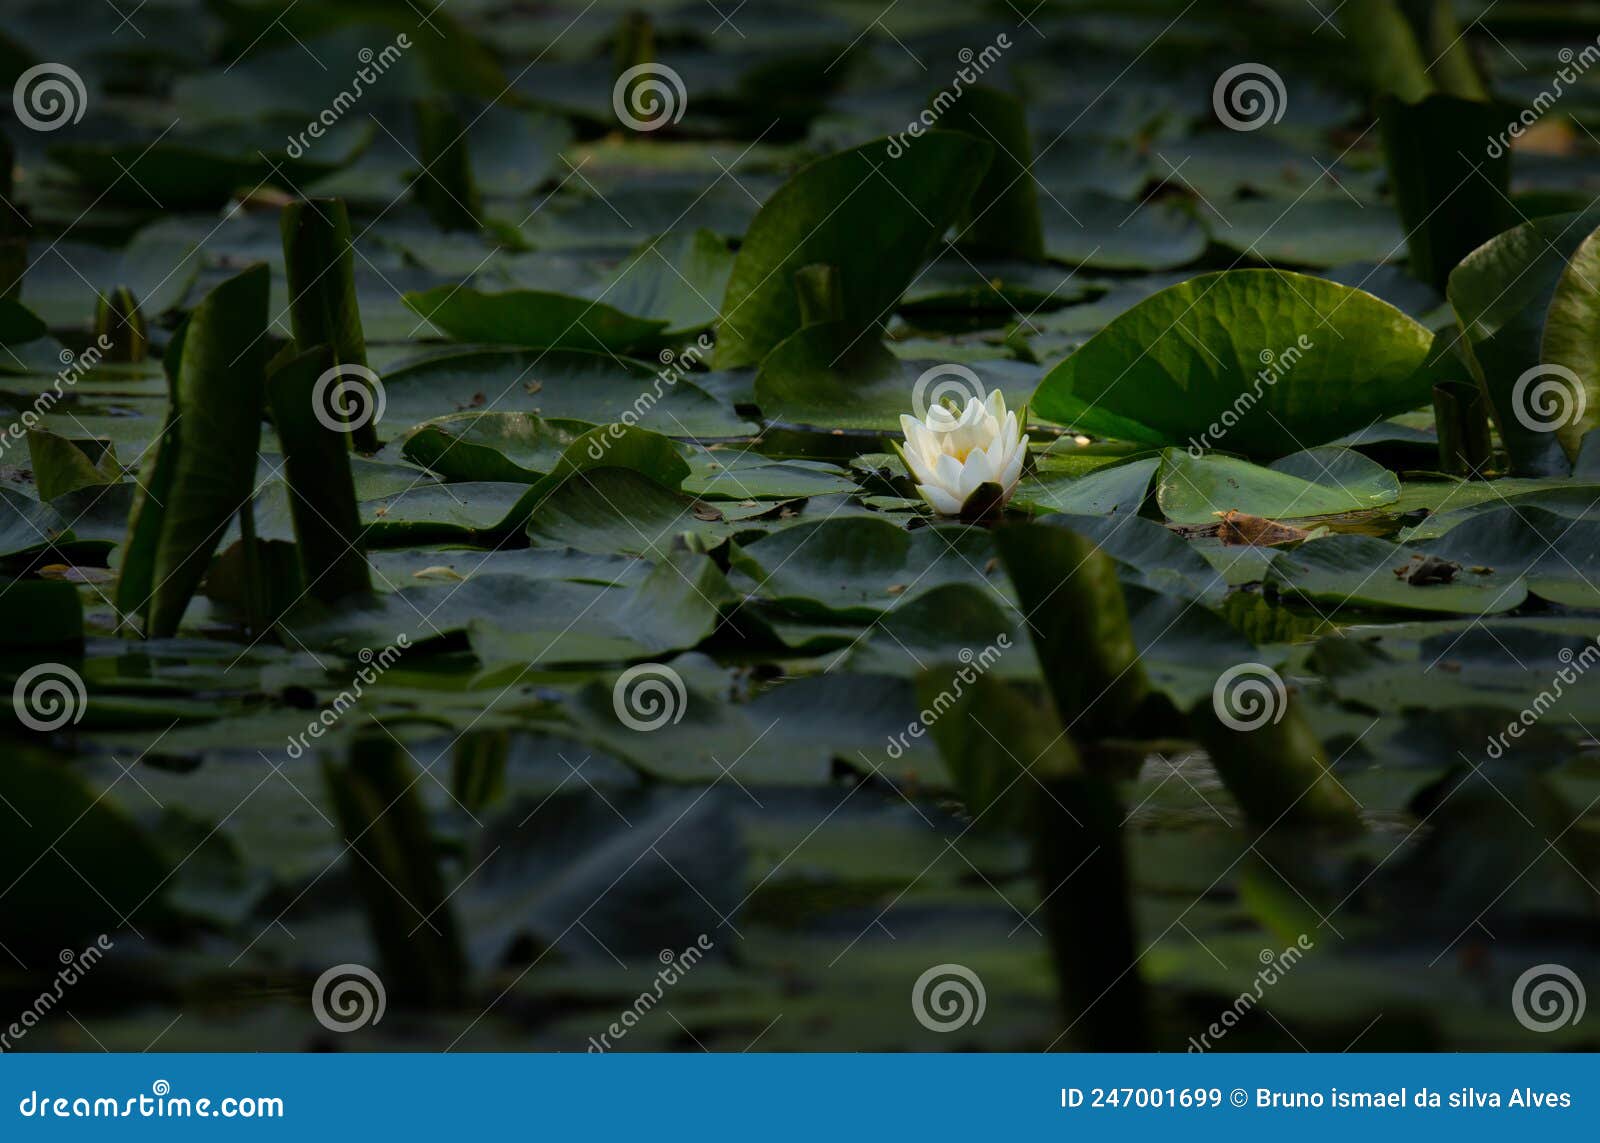 nature green pattern with a nymphaea alba `lirio de agua` an aquatic flower, esposende.